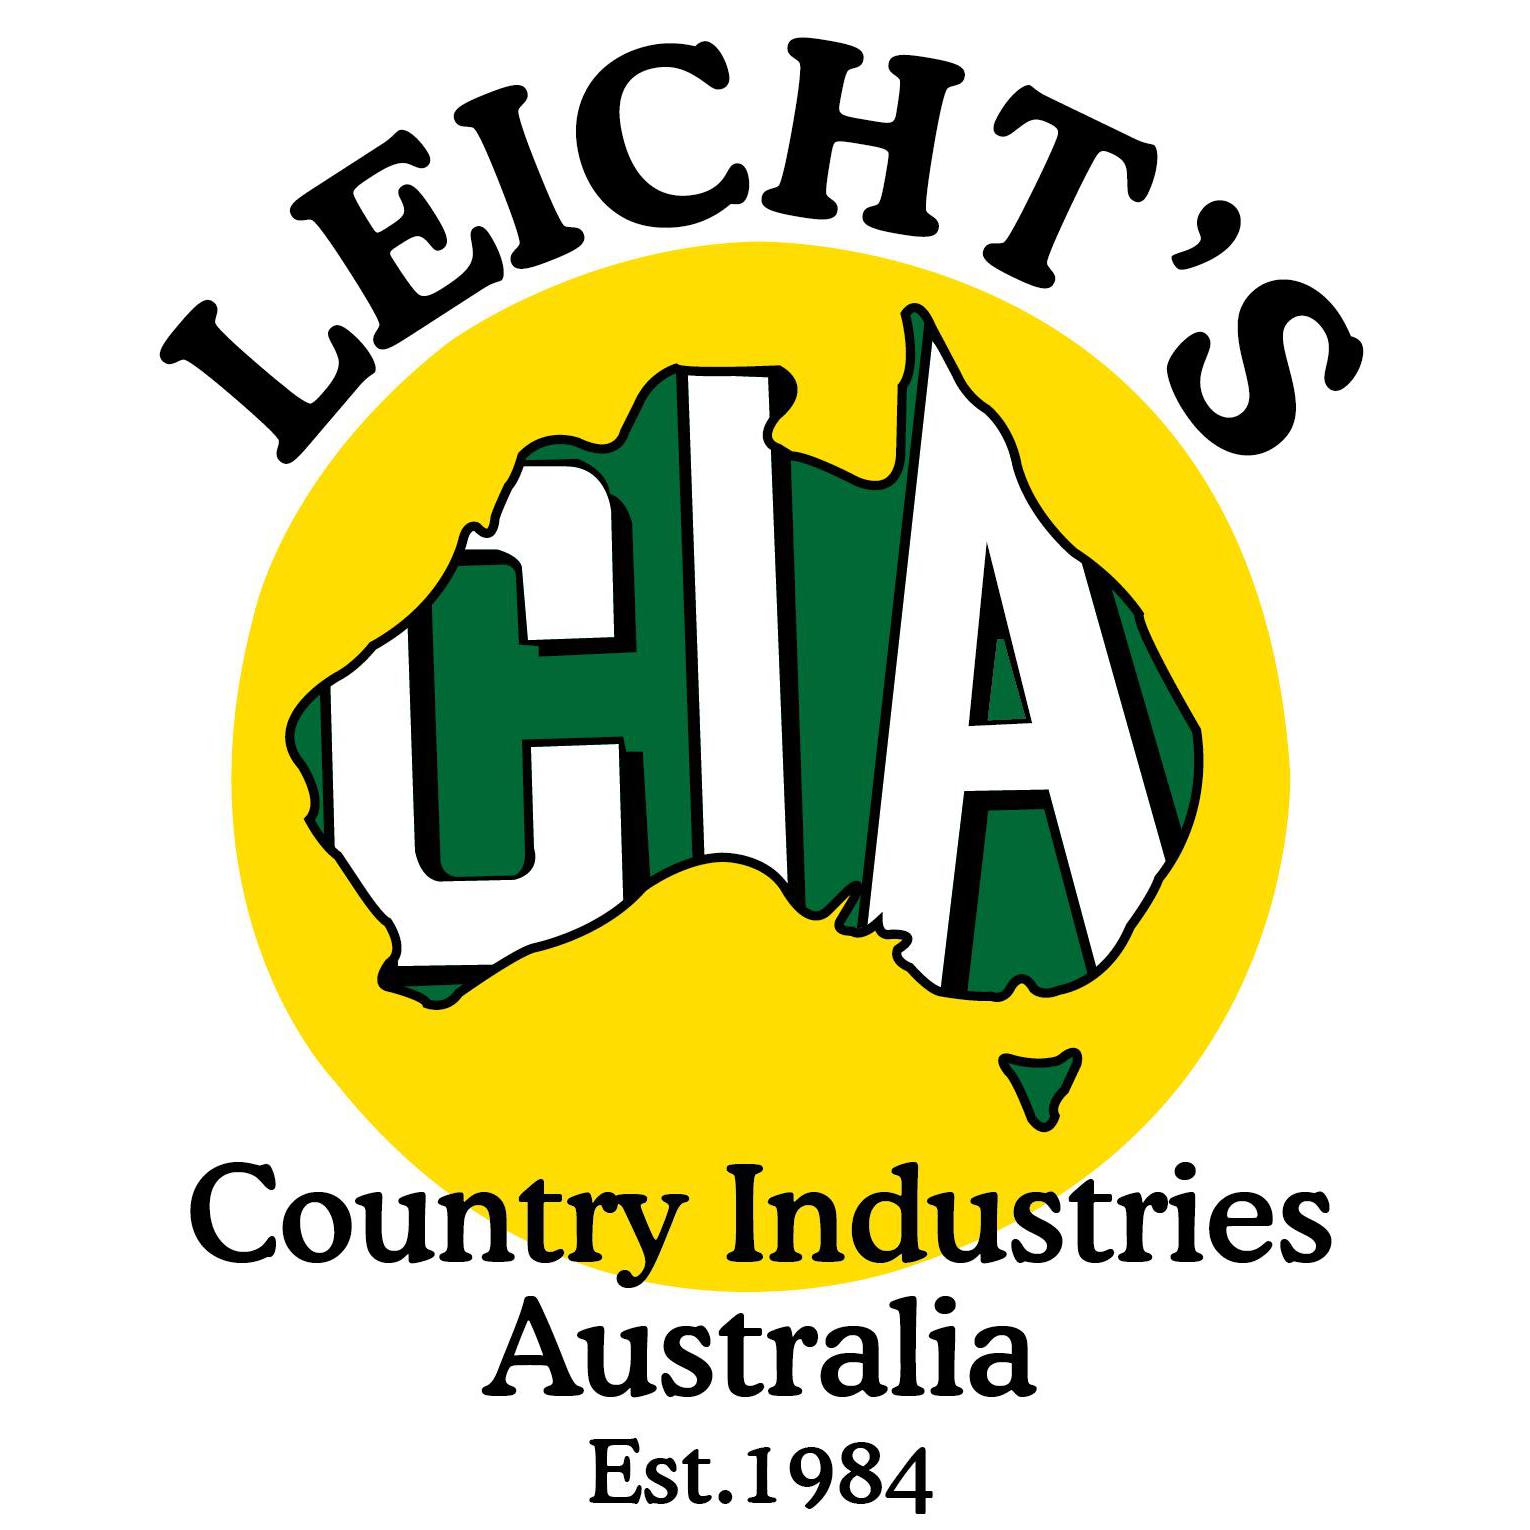 Leichts Country Industries Australia Logo